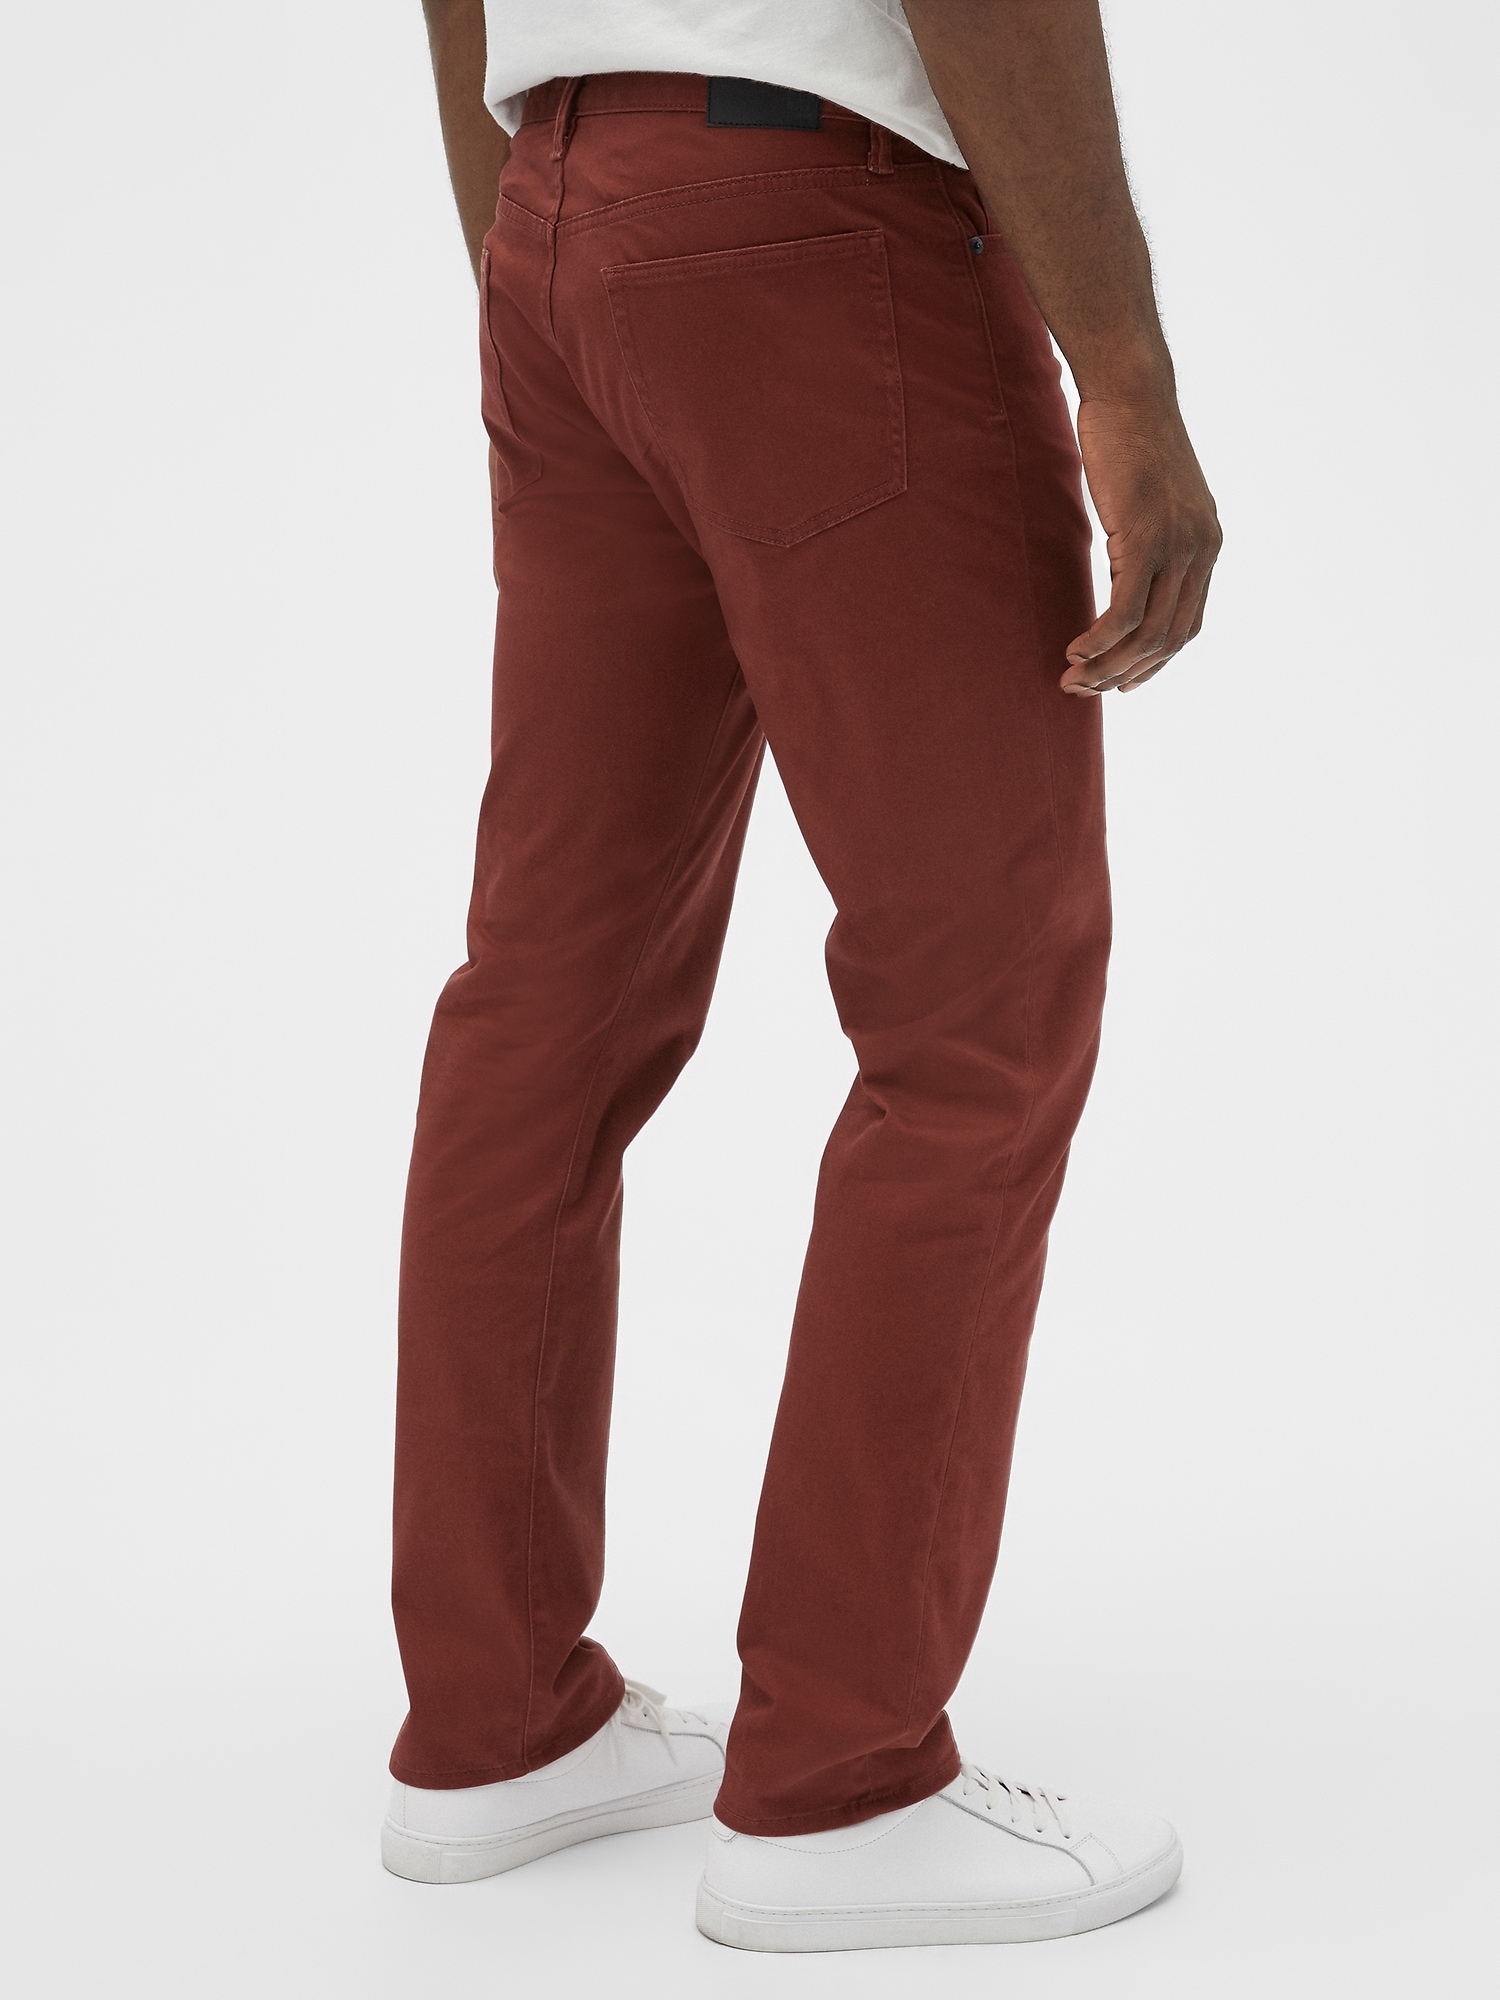 GAP Soft Wear Slim Fit Jeans with GapFlex Medium Indigo